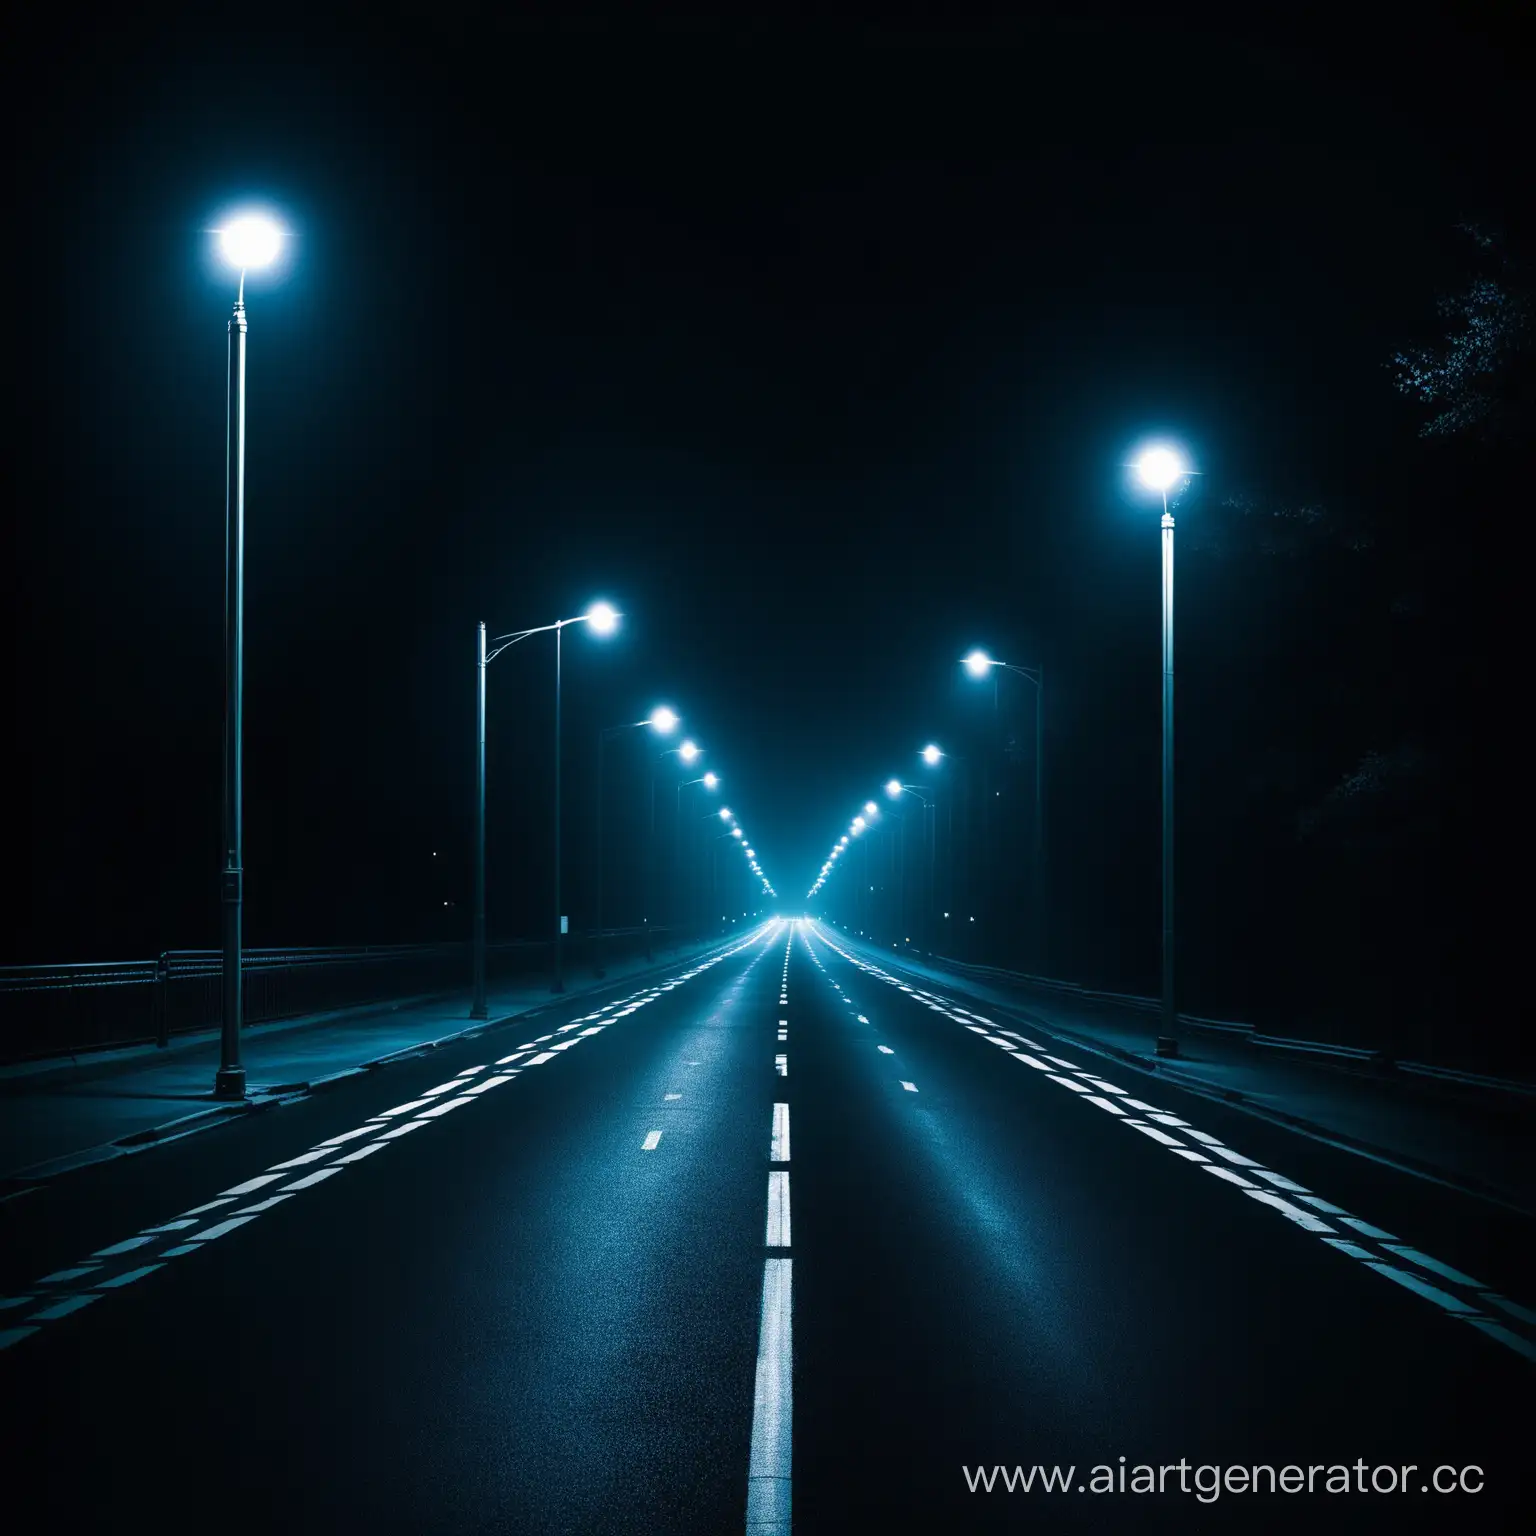 Nighttime-Cityscape-Dark-Road-Illuminated-by-City-Streetlights